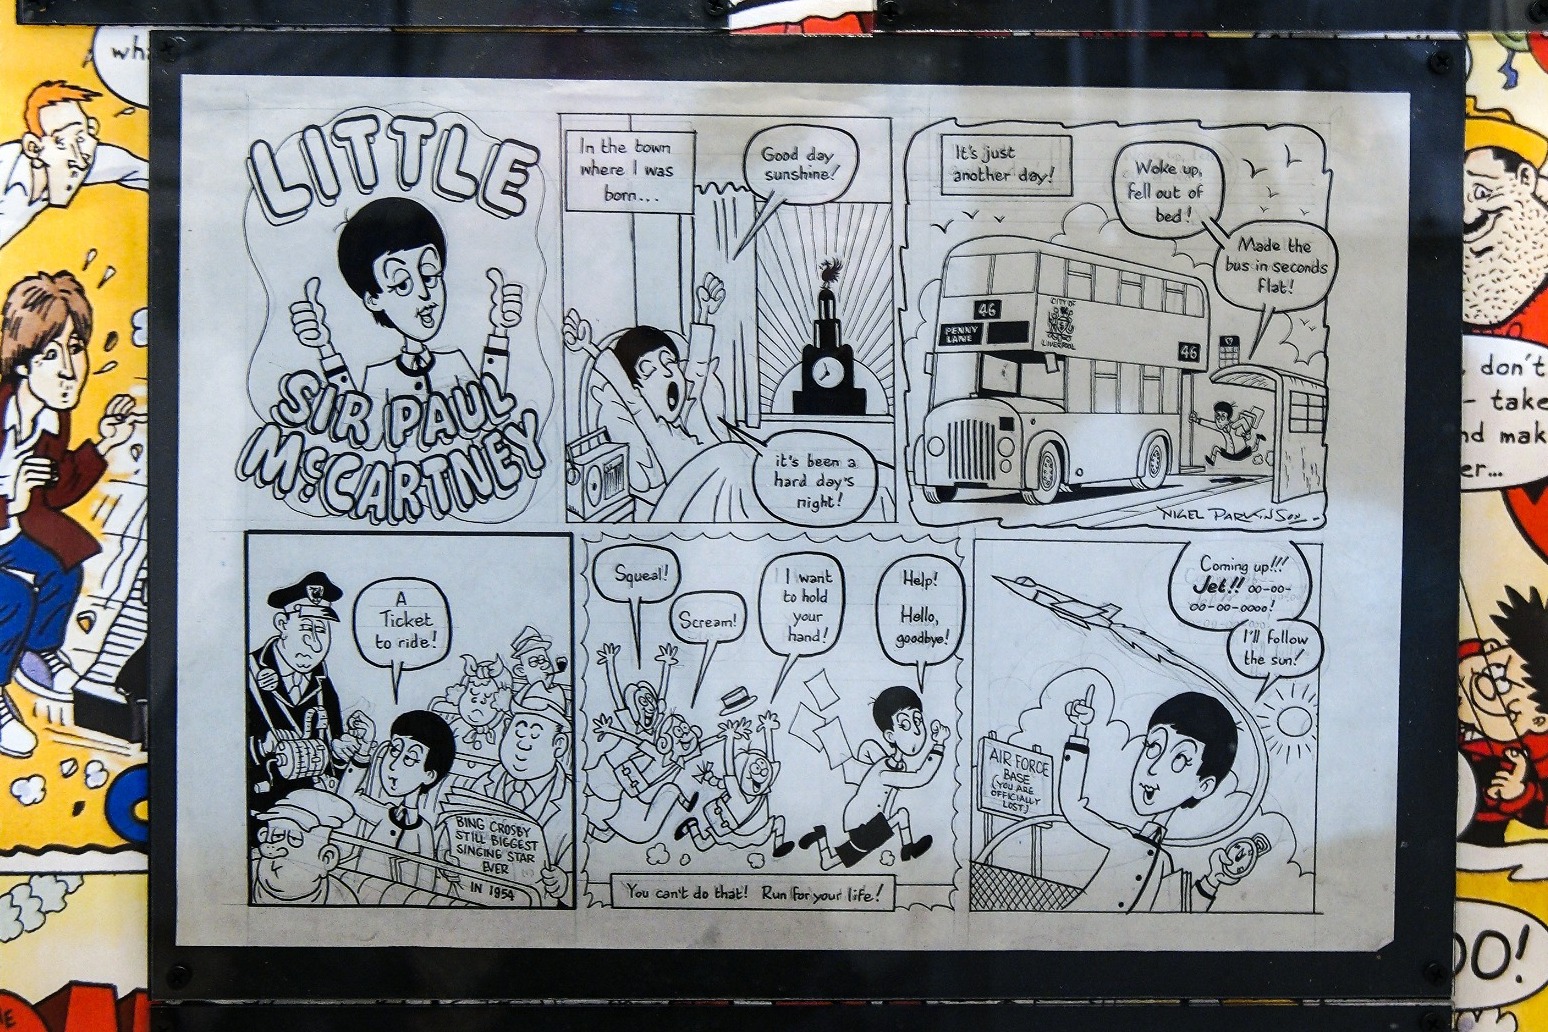 Comic strip starring Sir Paul McCartney goes on display 